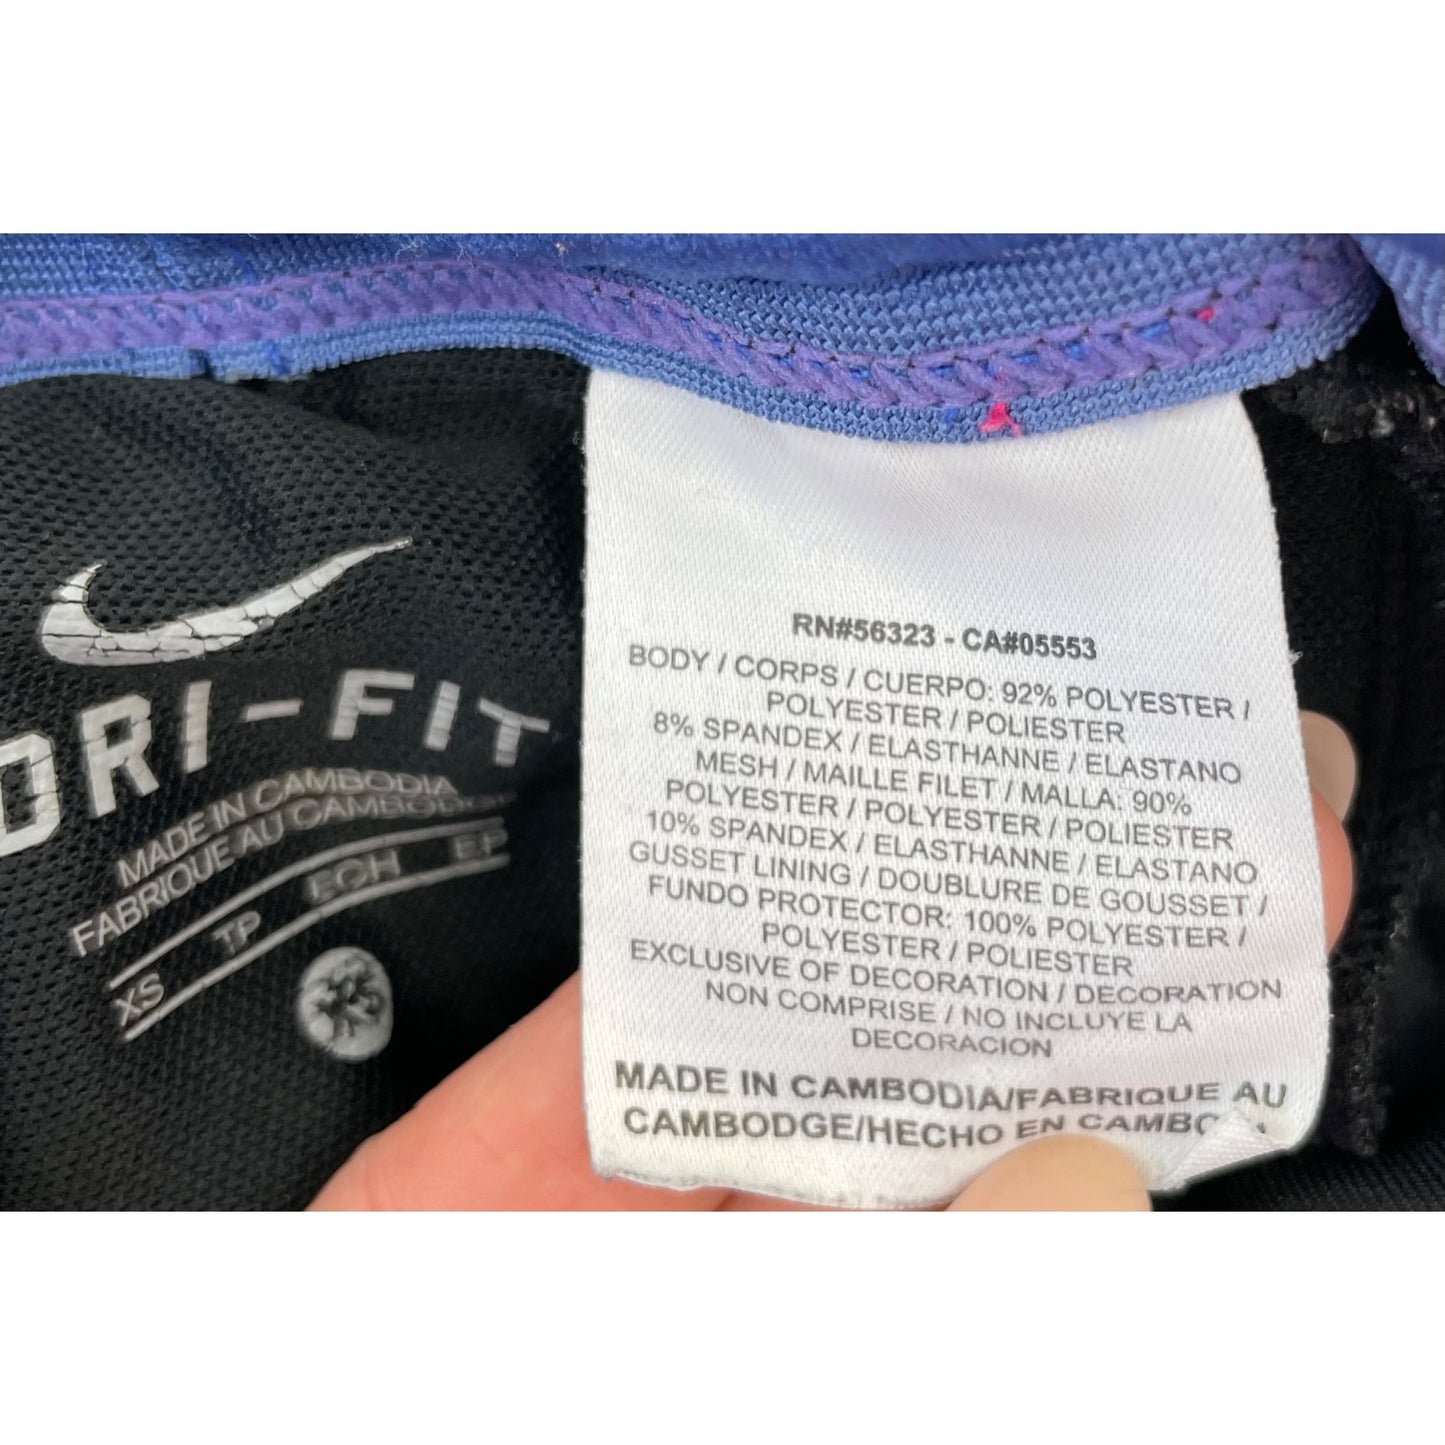 Nike Dry Fit Women's Size XS Black & Blue Workout Leggings